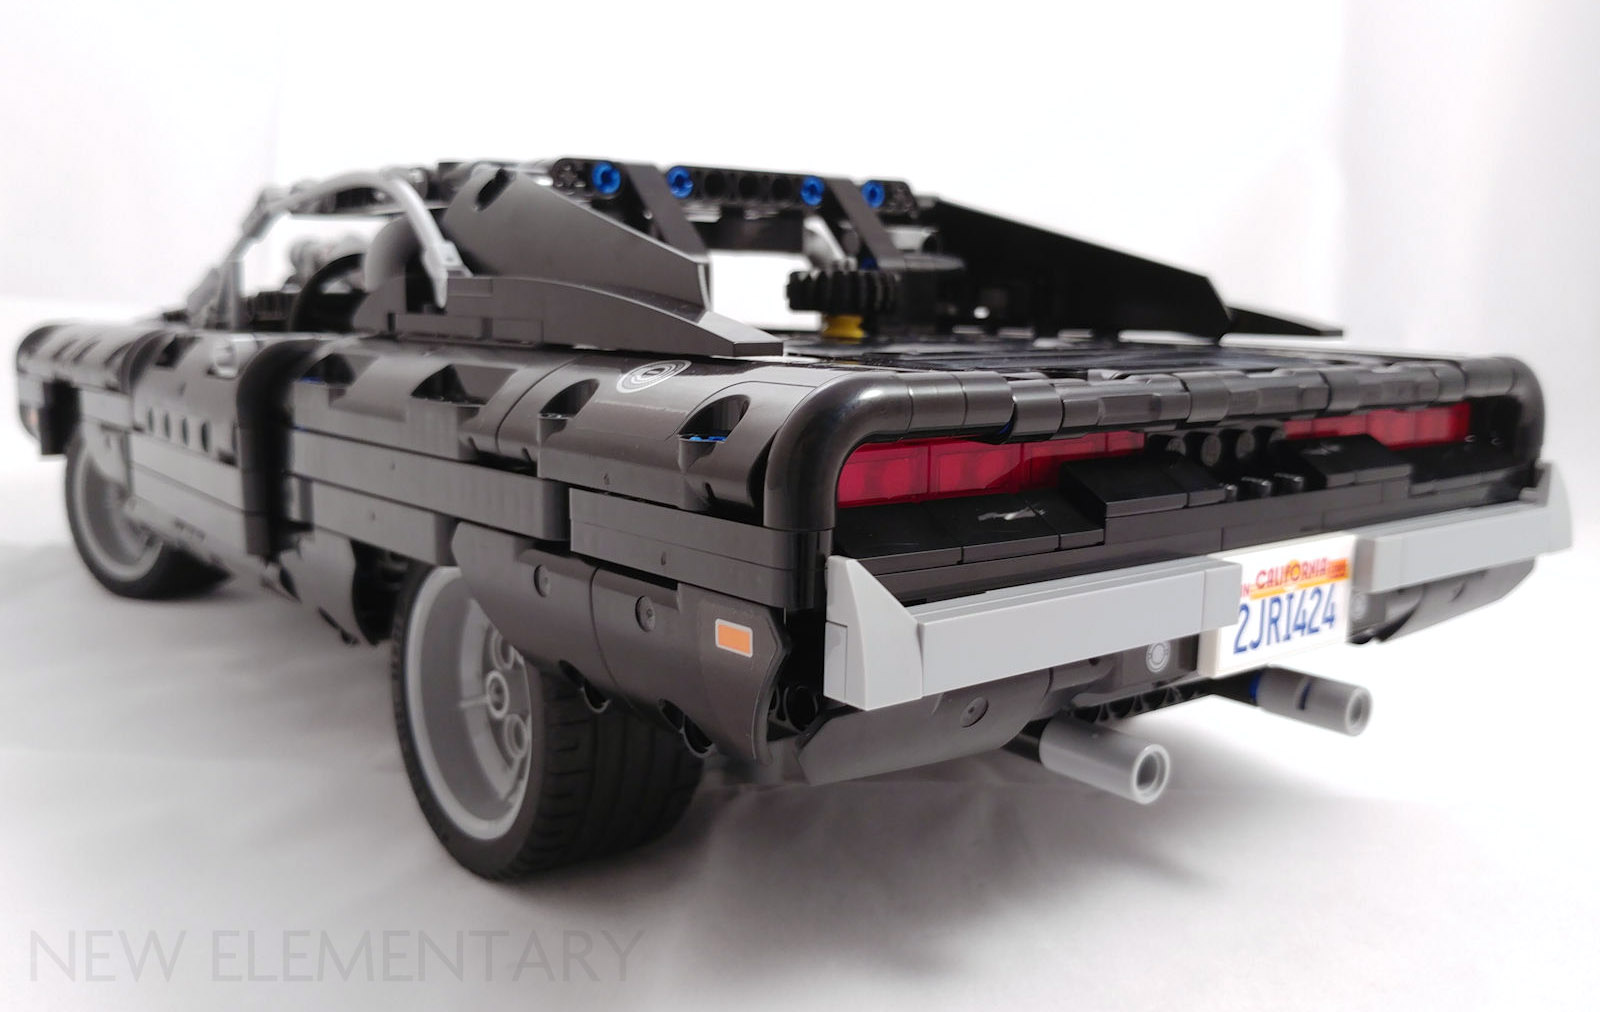 Avis] LEGO Fast and Furious : on a construit la Dodge Charger de Dom !